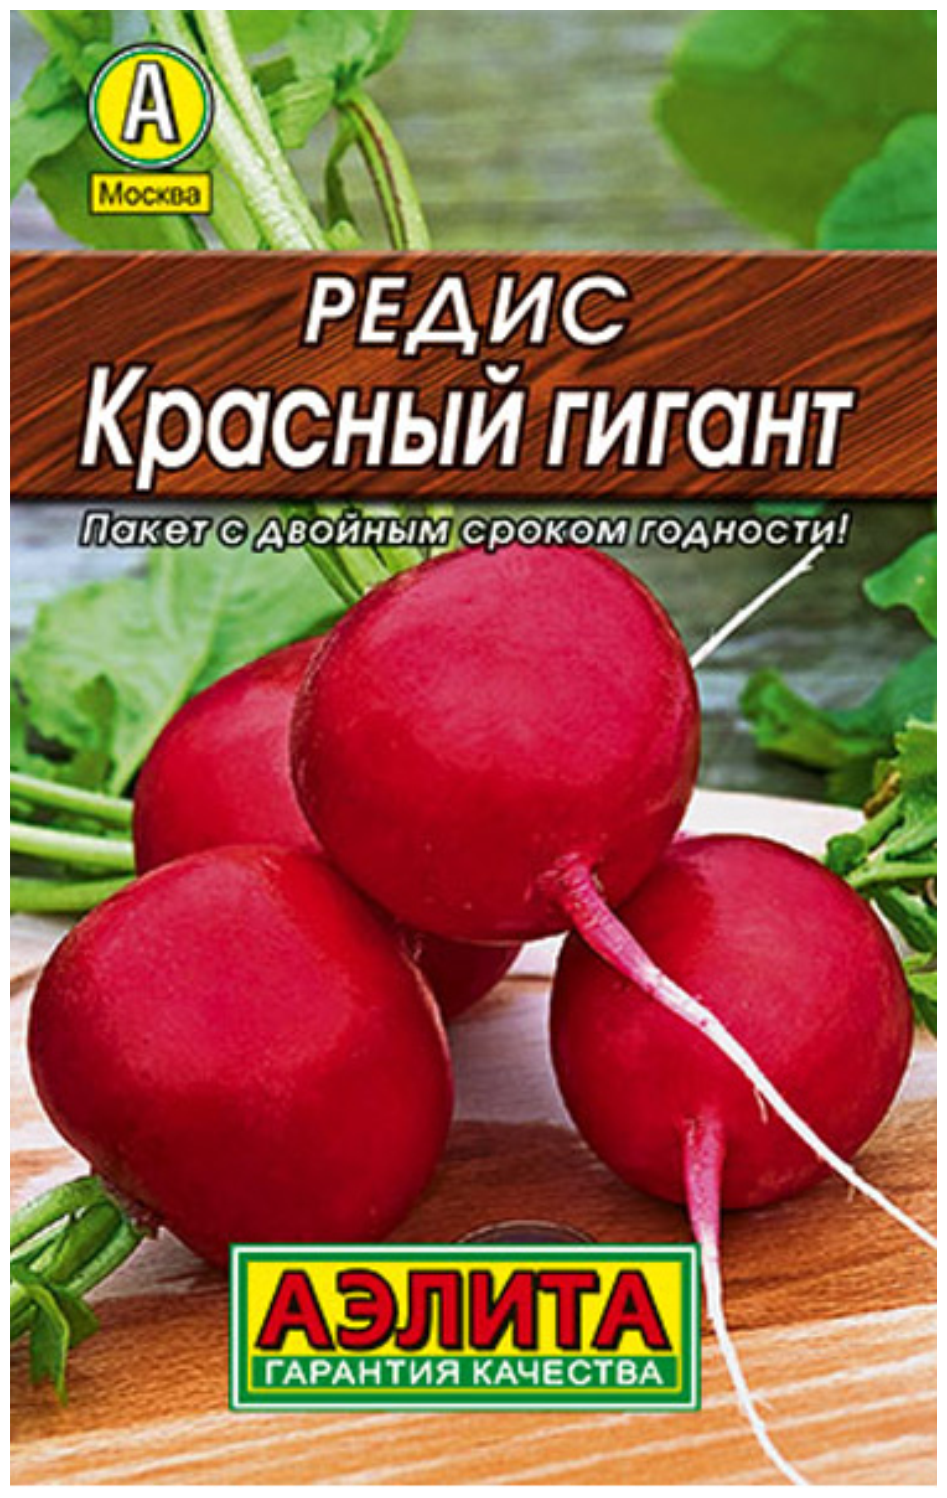 Семена редис Красный гигант 3 гр. + 2 Подарка